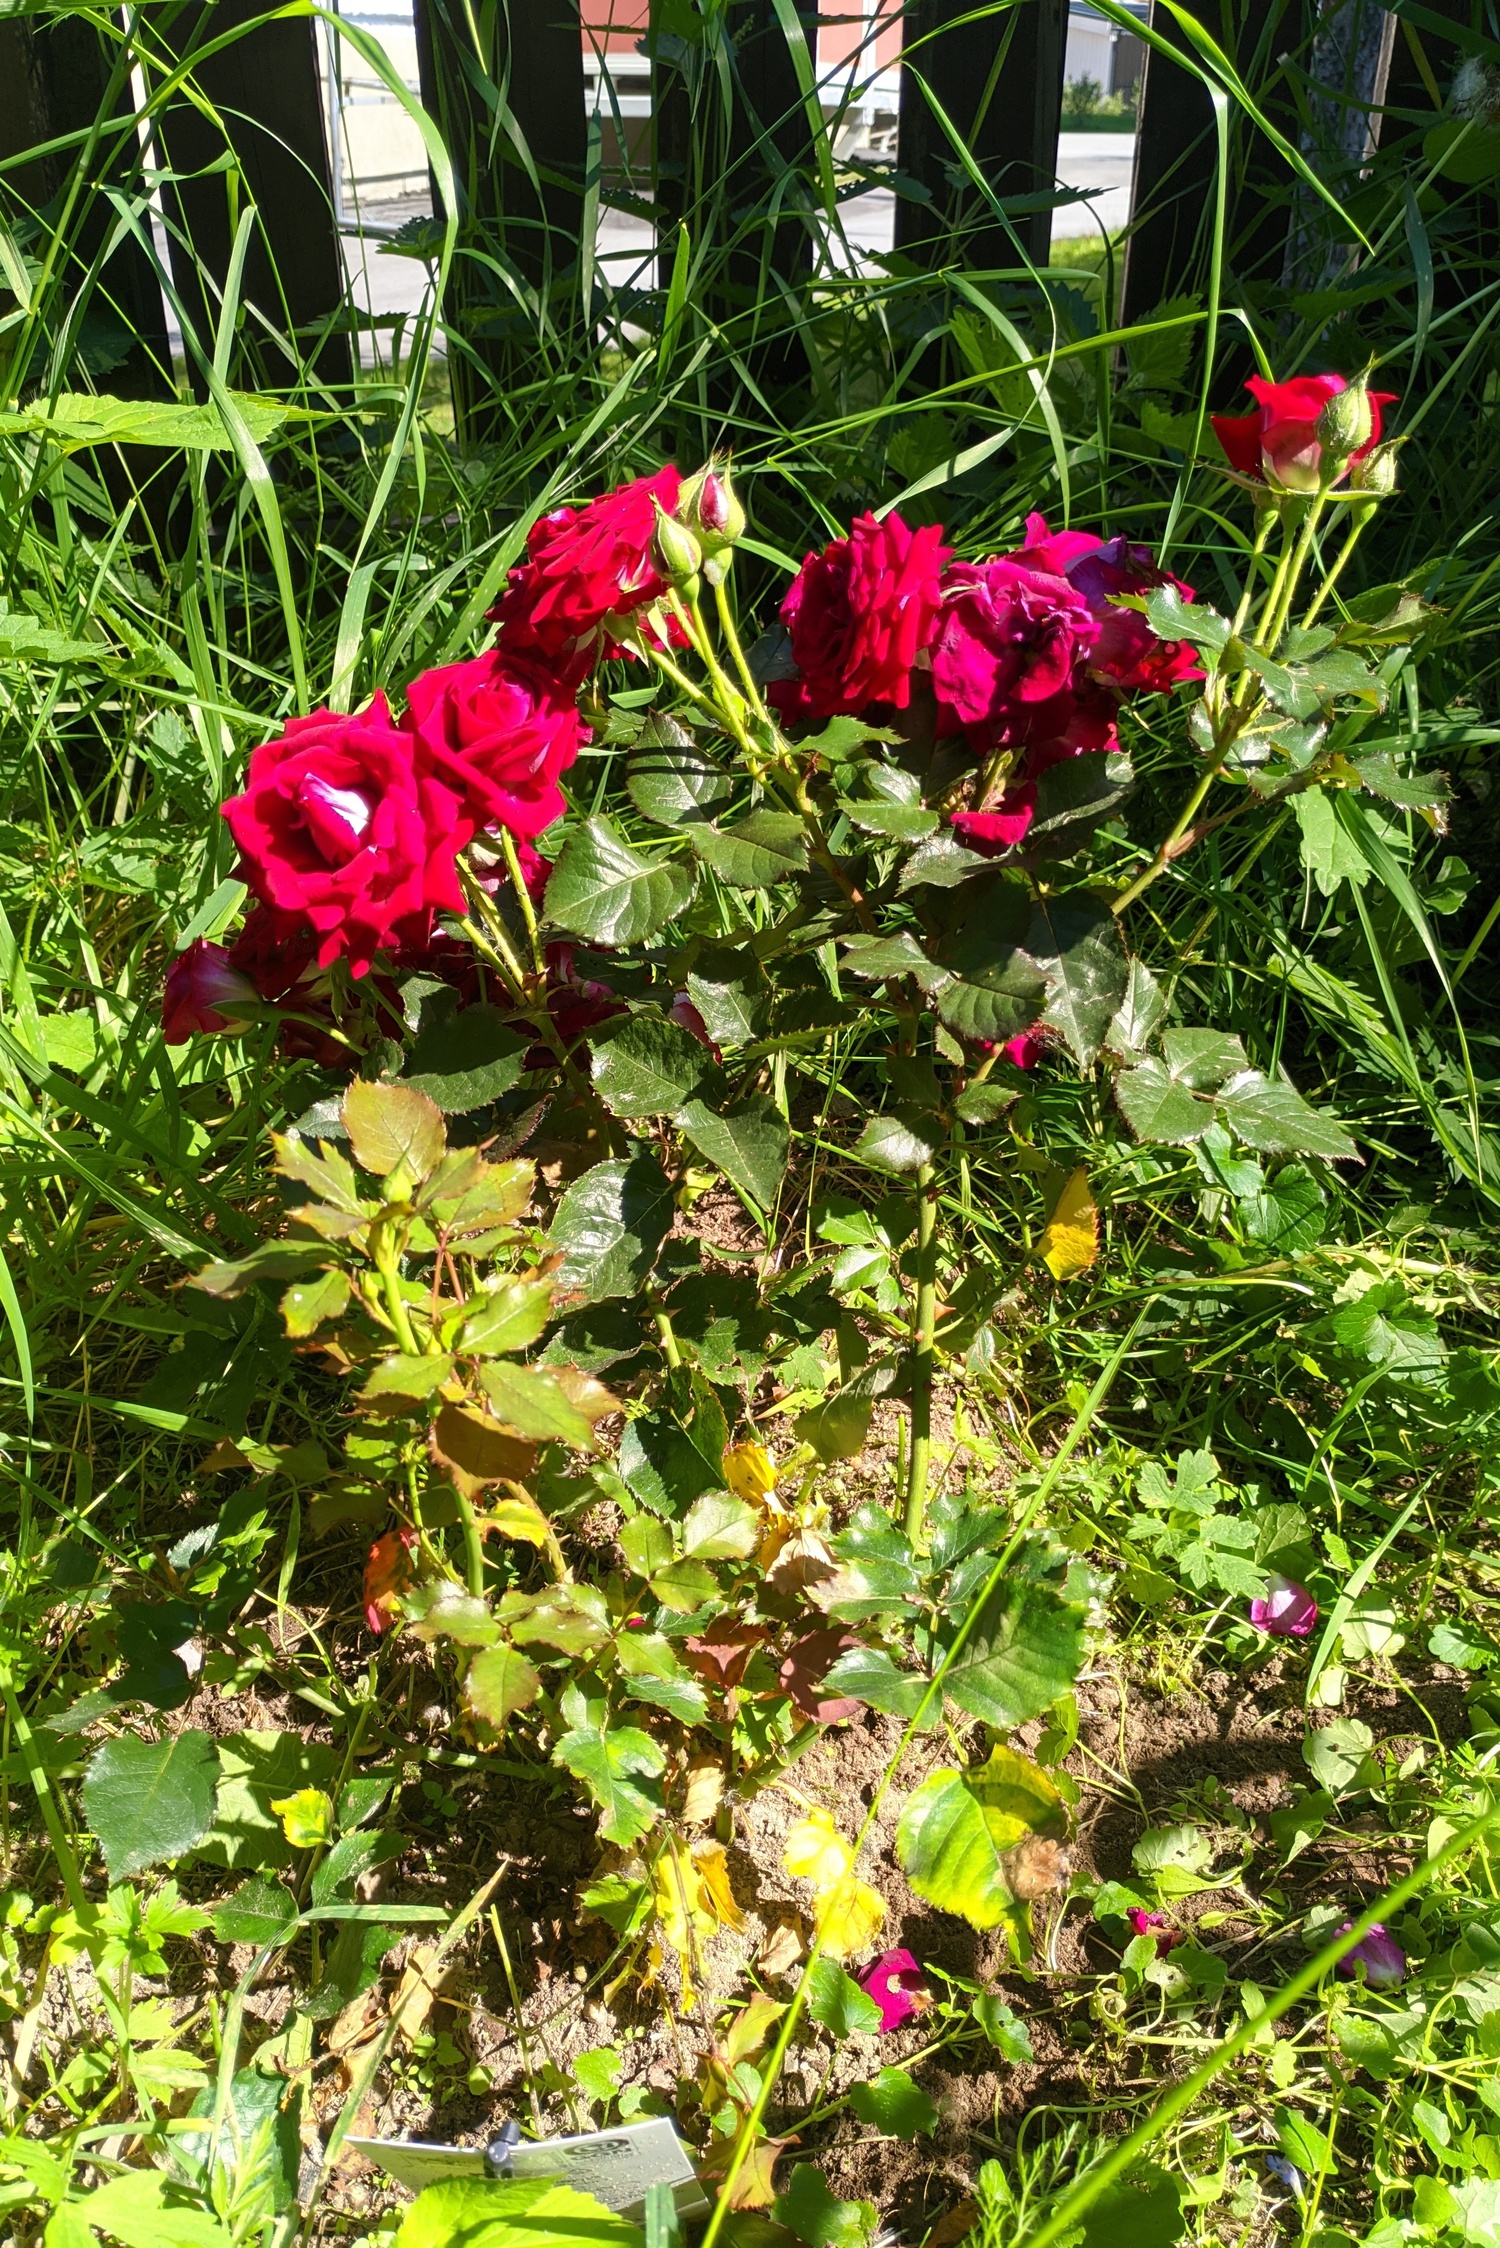 Jag begravde Surgubben under rosen som Rebecca planterade i "gerillaodlingen".